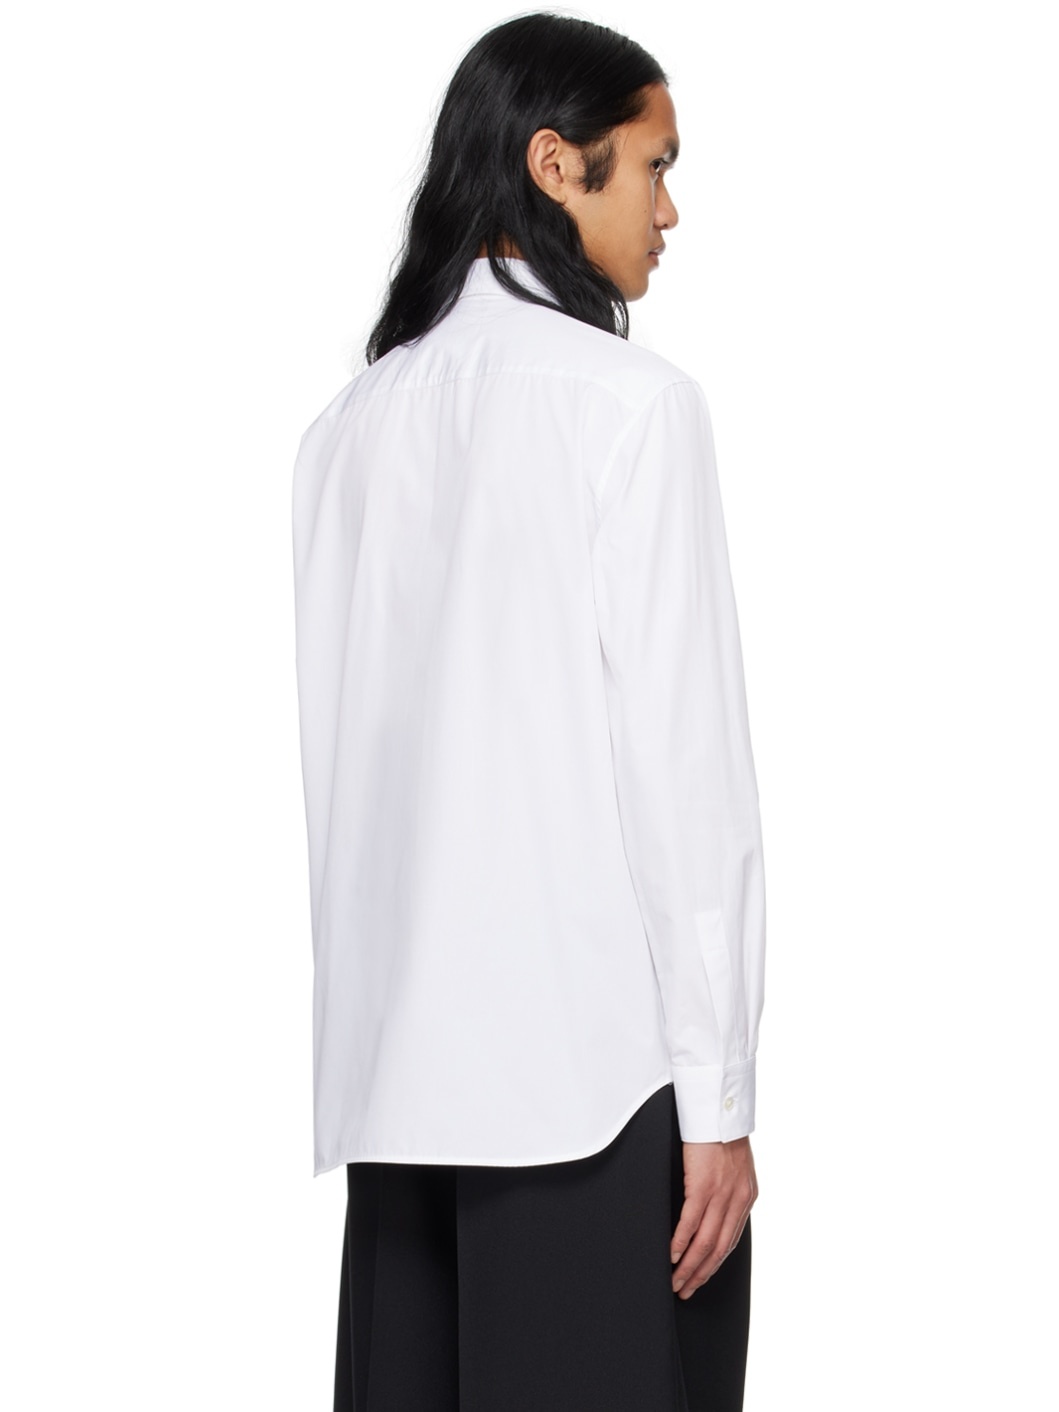 White Pocket Shirt - 3